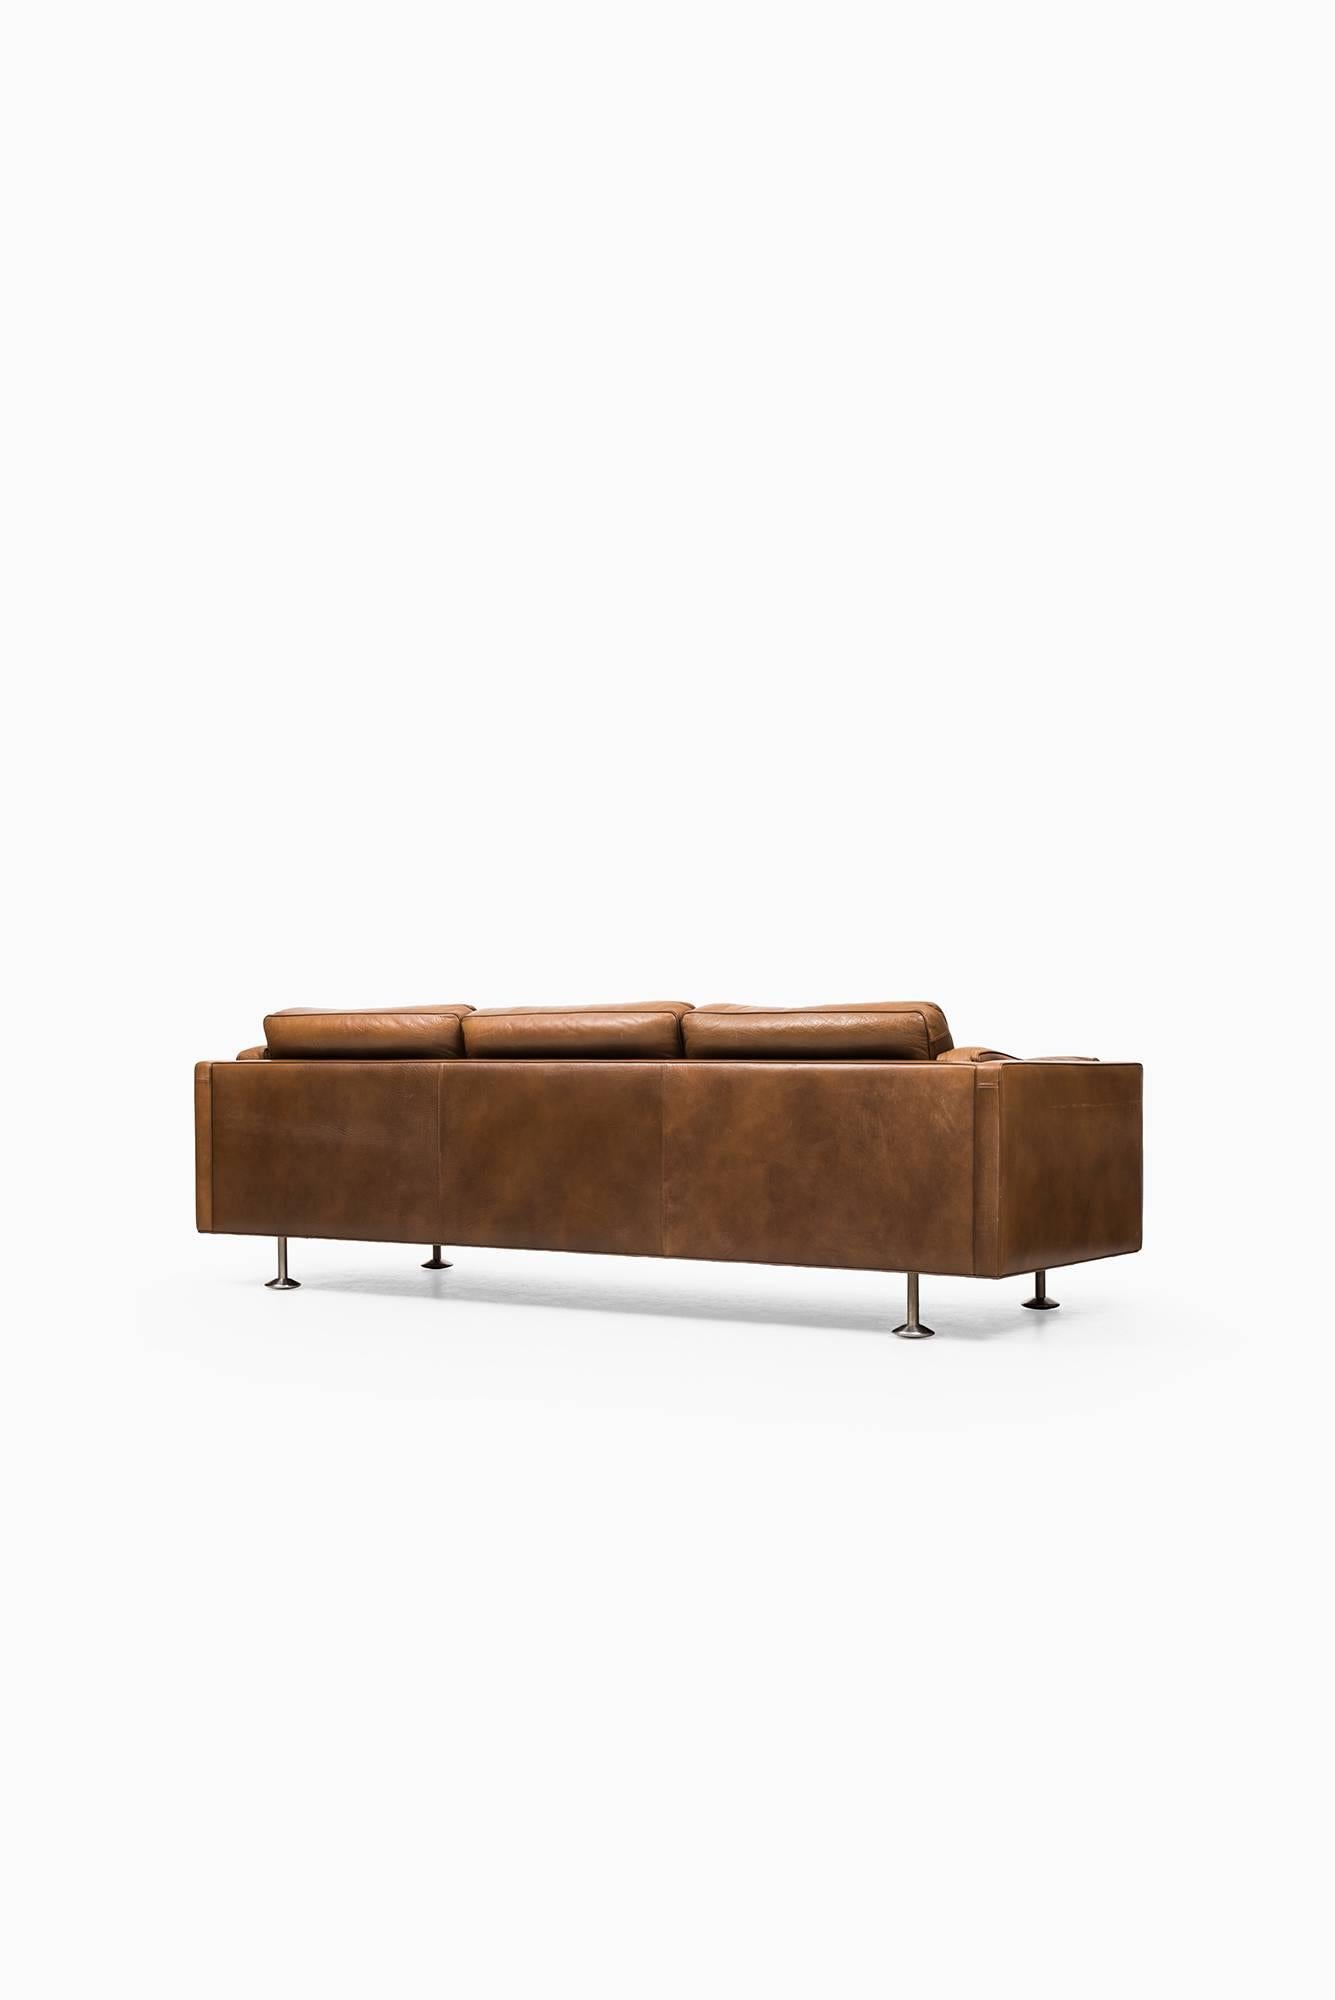 Illum Wikkelsø Sofa in Brown Leather Produced in Denmark 1